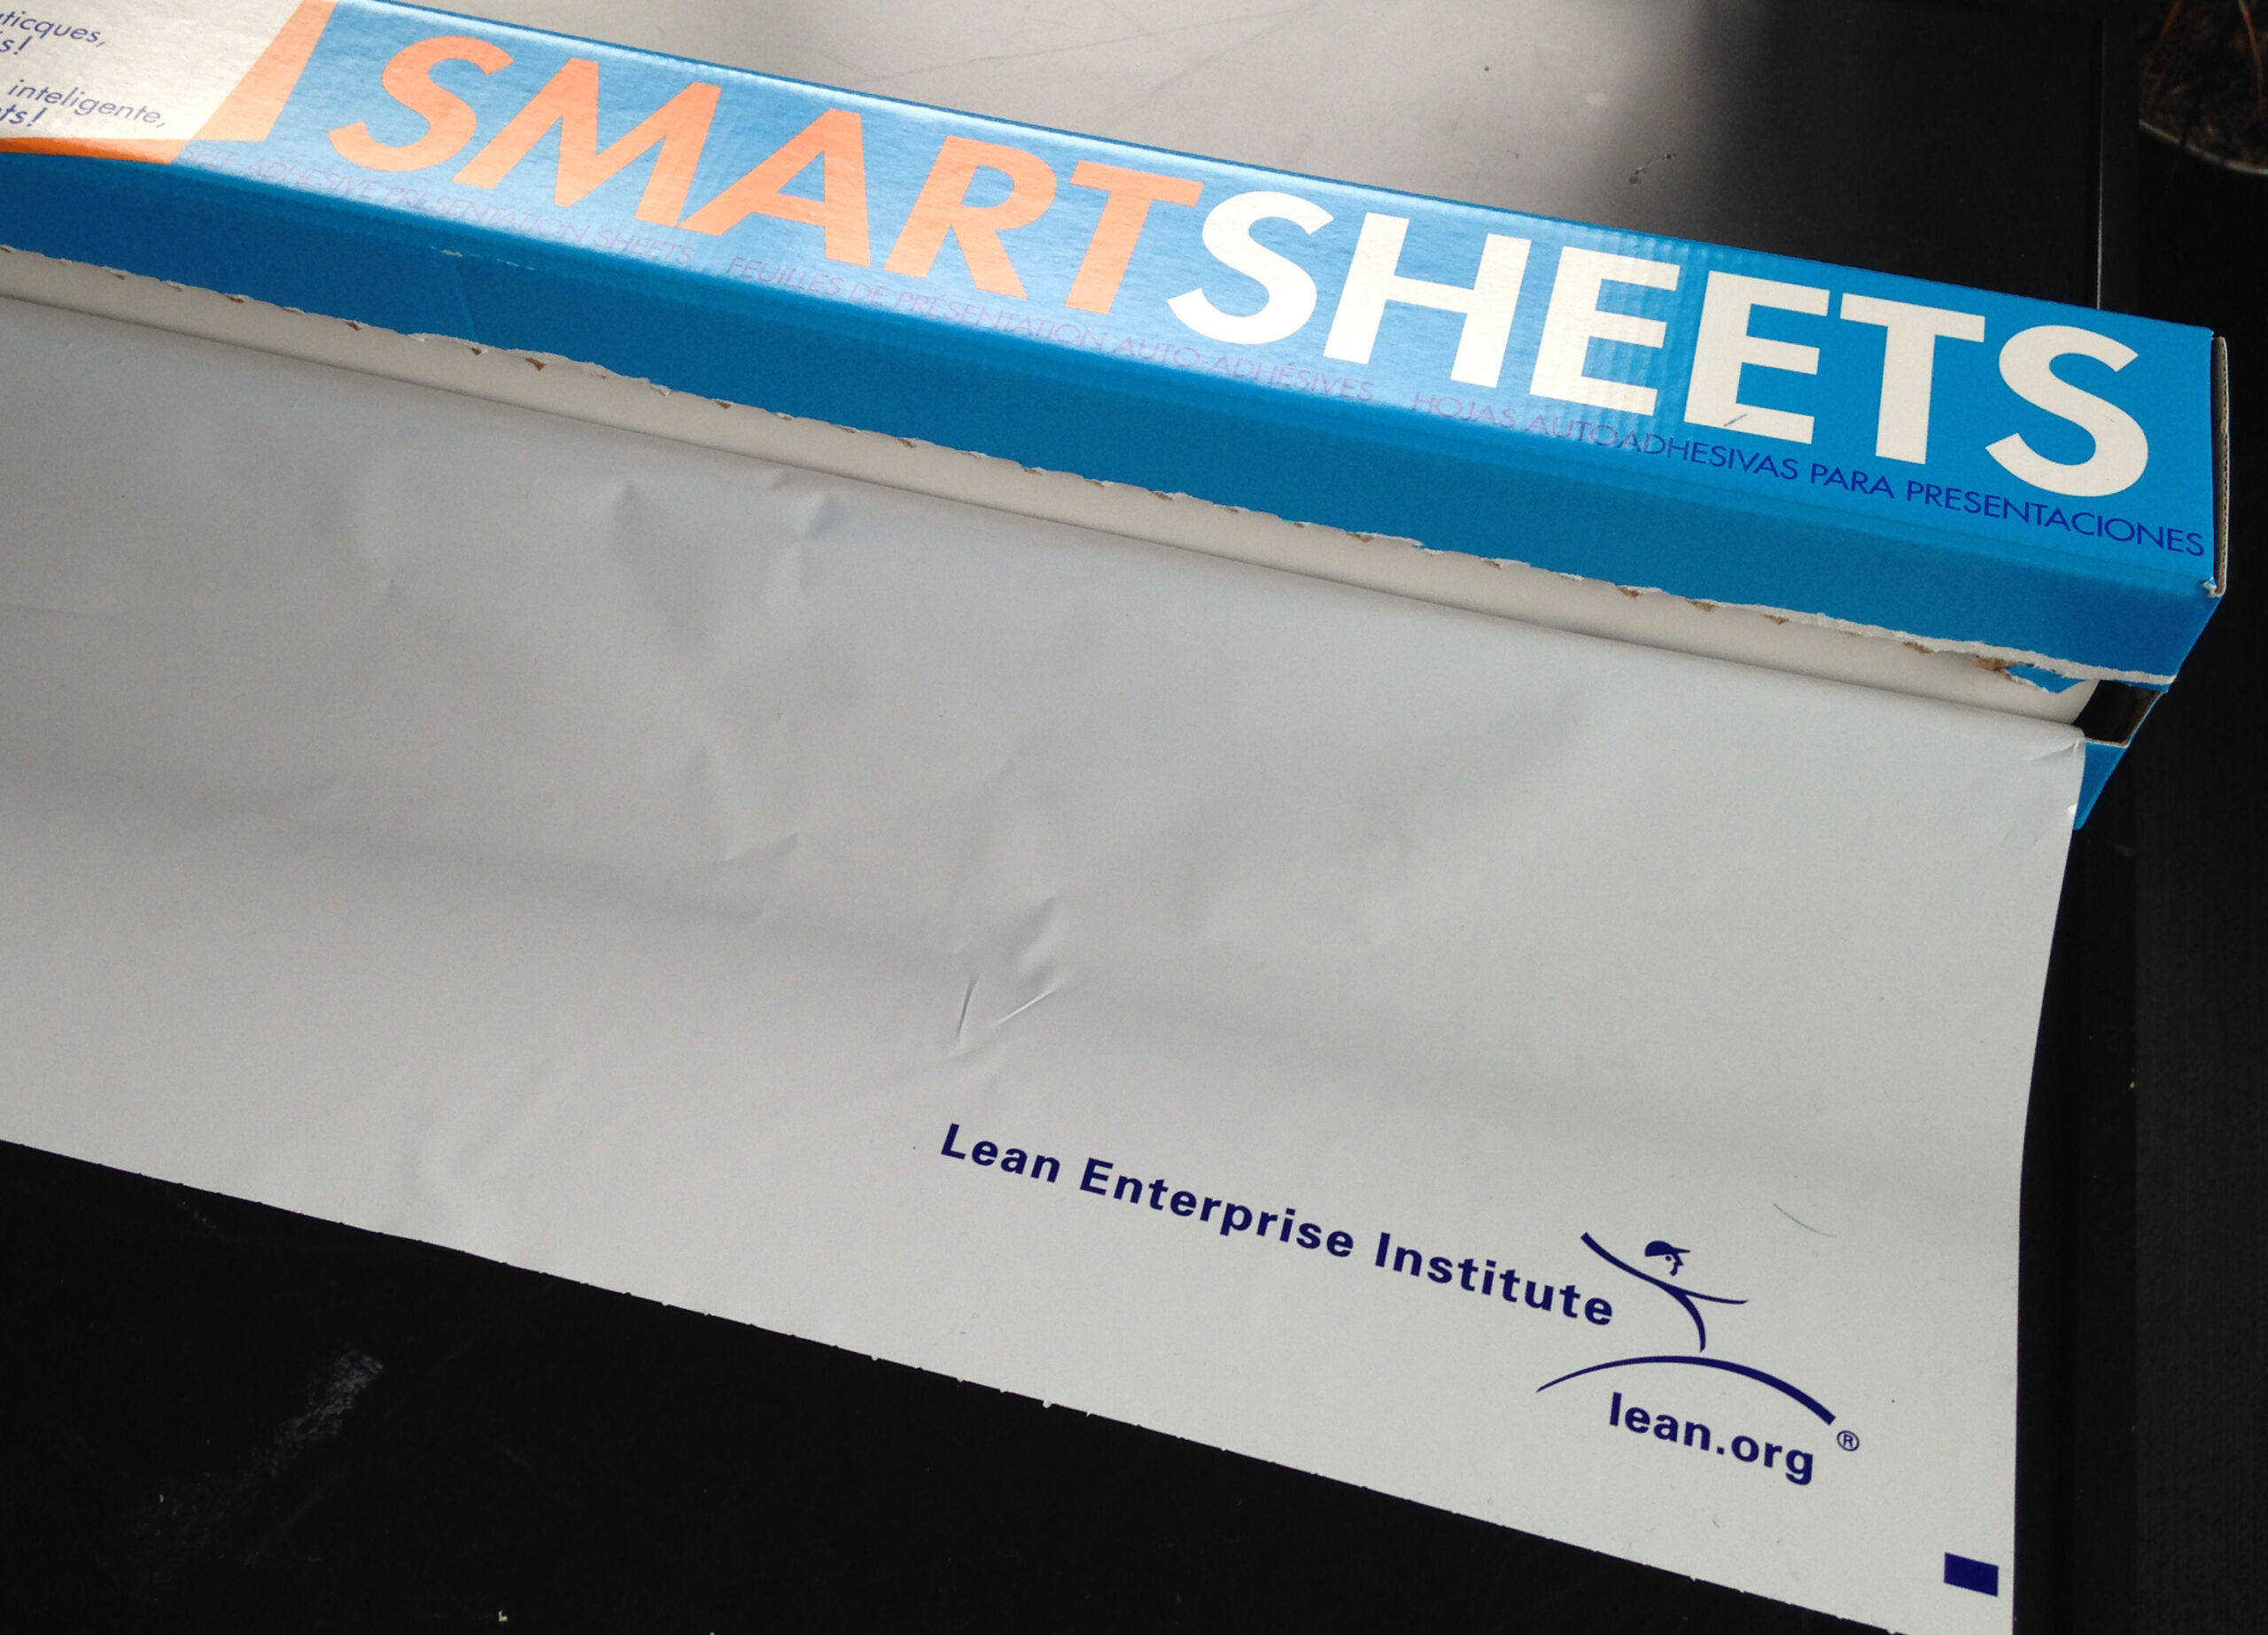 SMARTSHEETS, 31 1/2 in Dry Erase Ht, 23 1/2 in Dry Erase Wd, Dry Erase Sheet  - 5PWH8